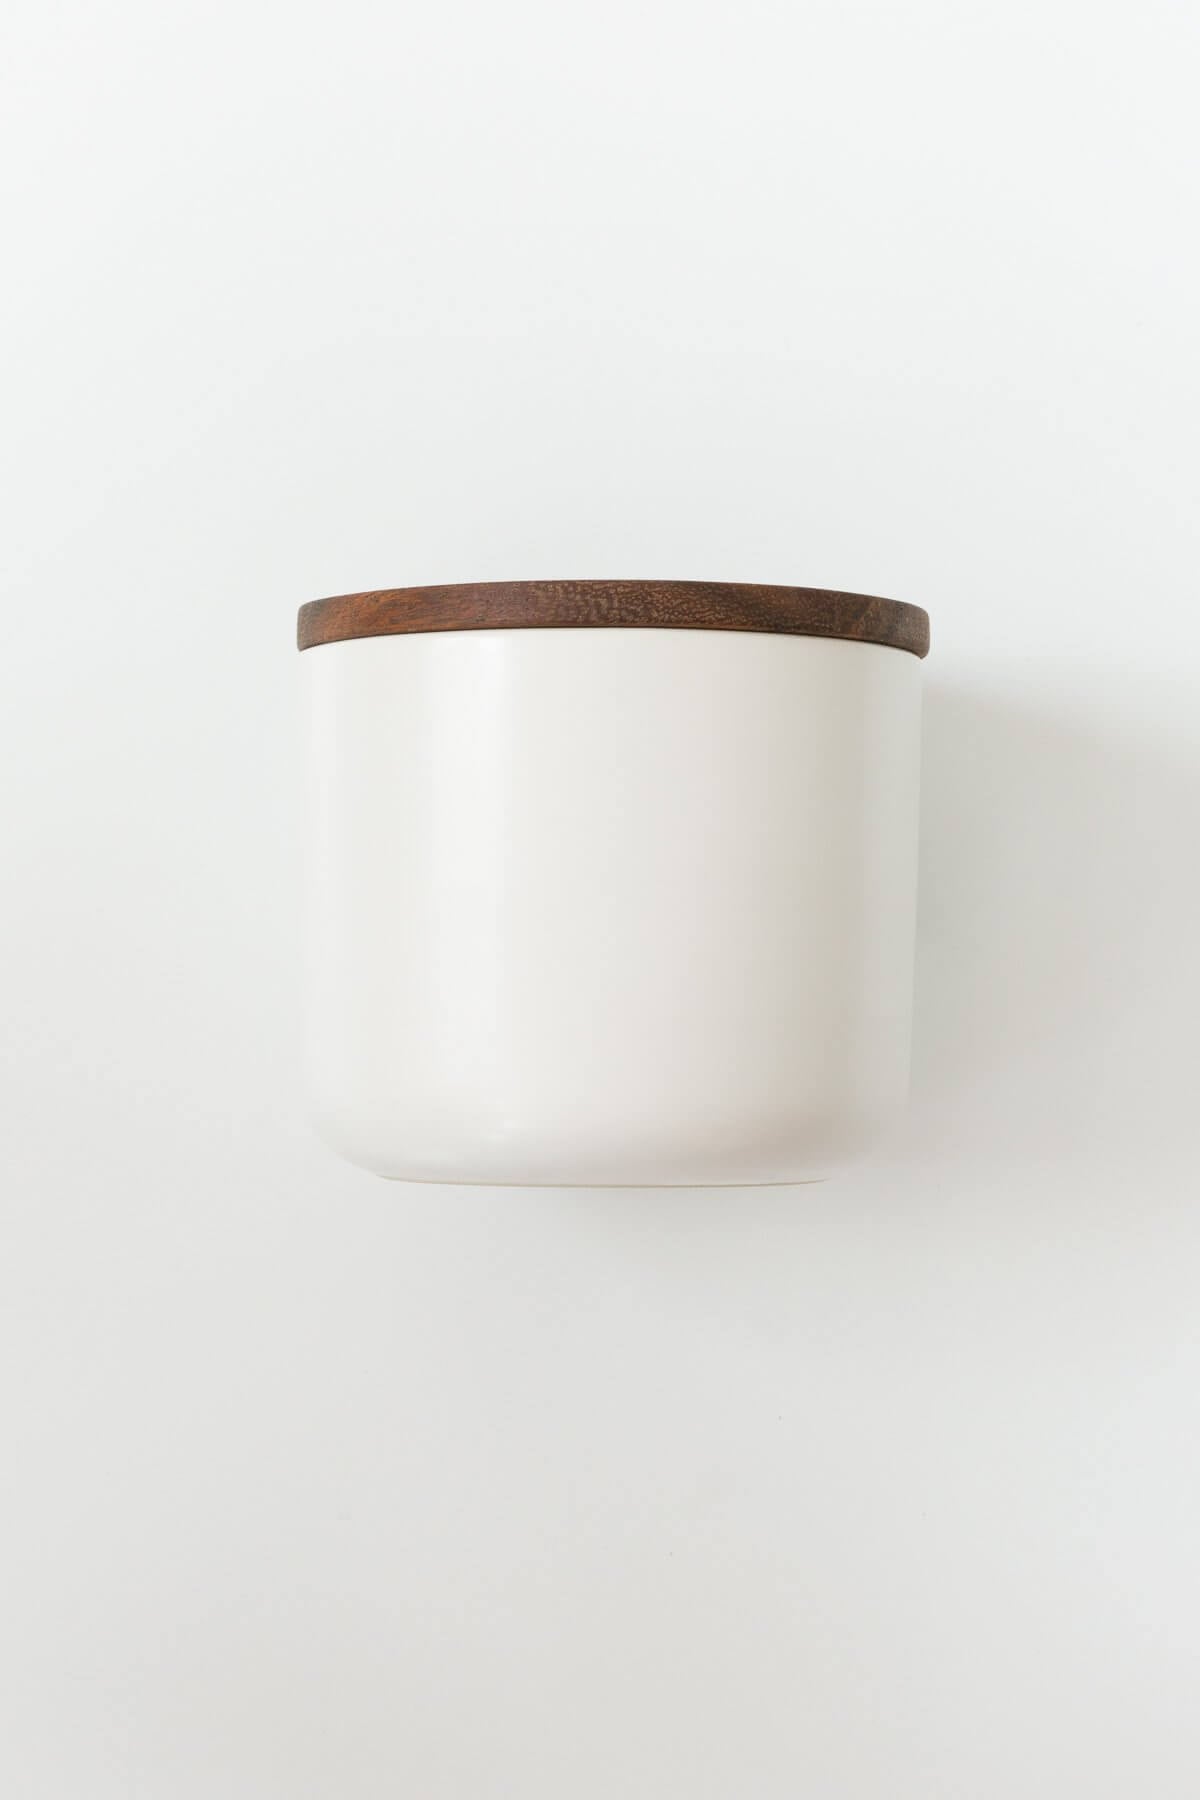 Be Home Stoneware White Ceramic Container